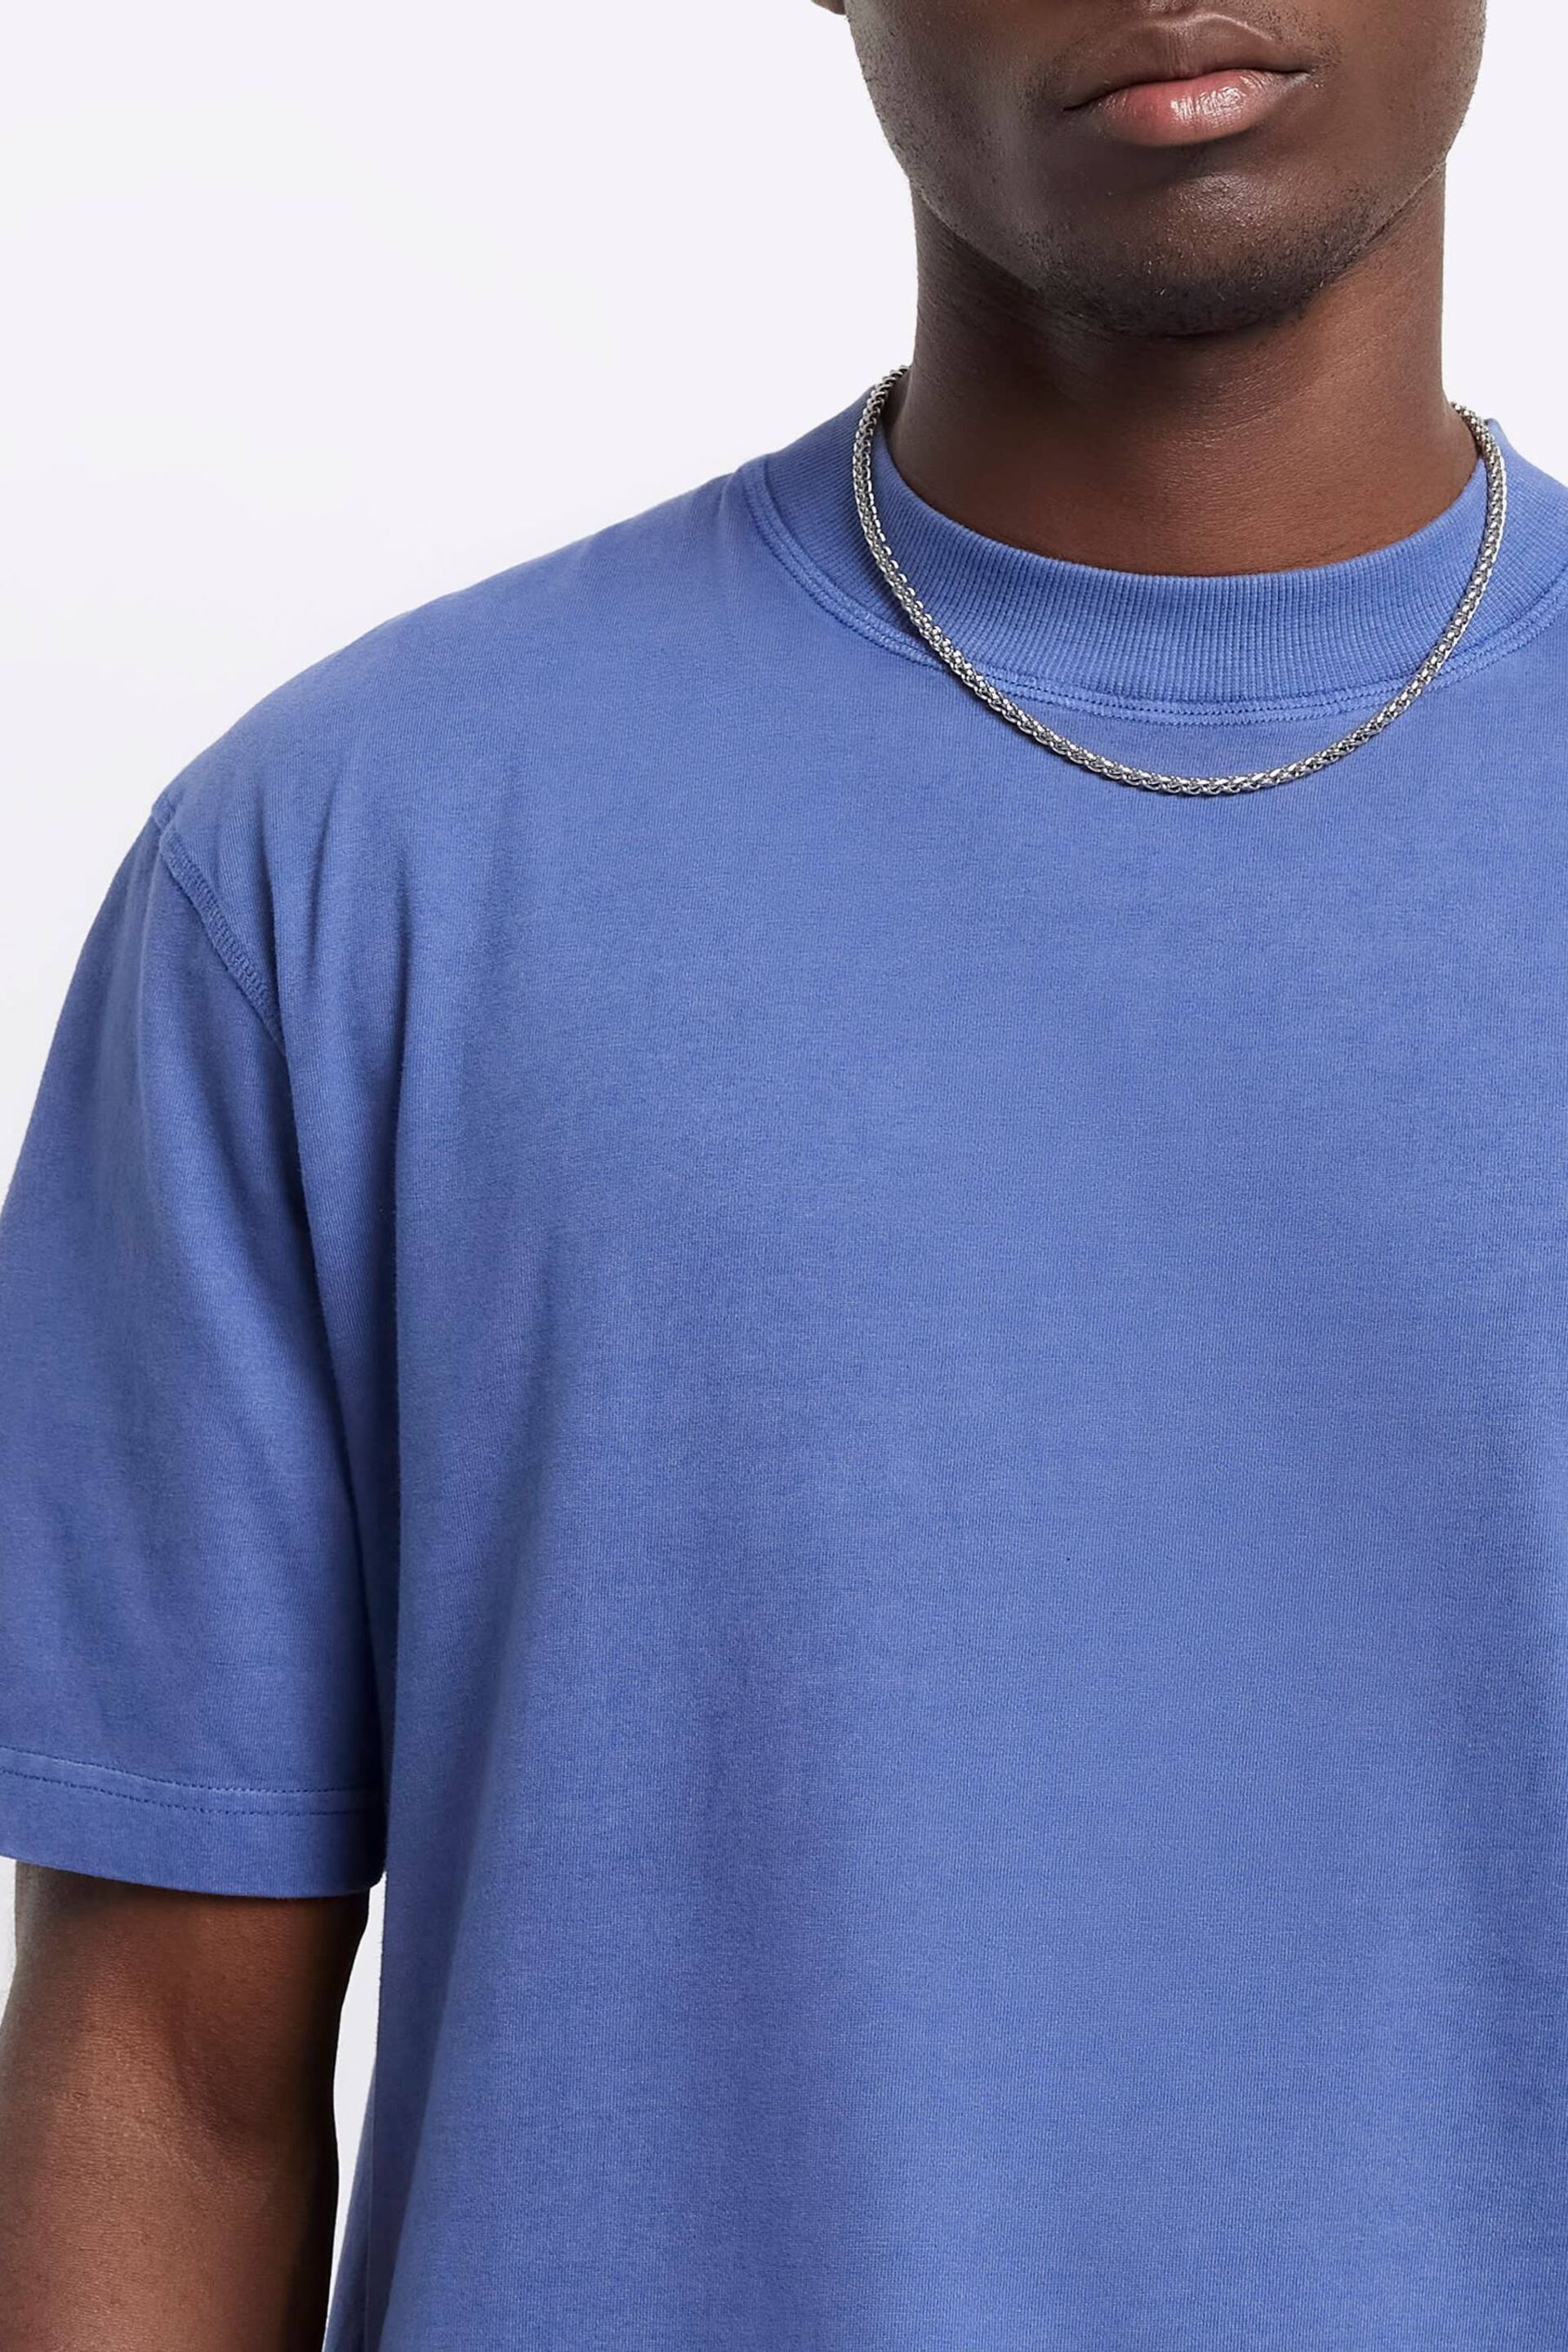 River Island Blue Studio Washed Regular Fit T-Shirt - Image 3 of 4